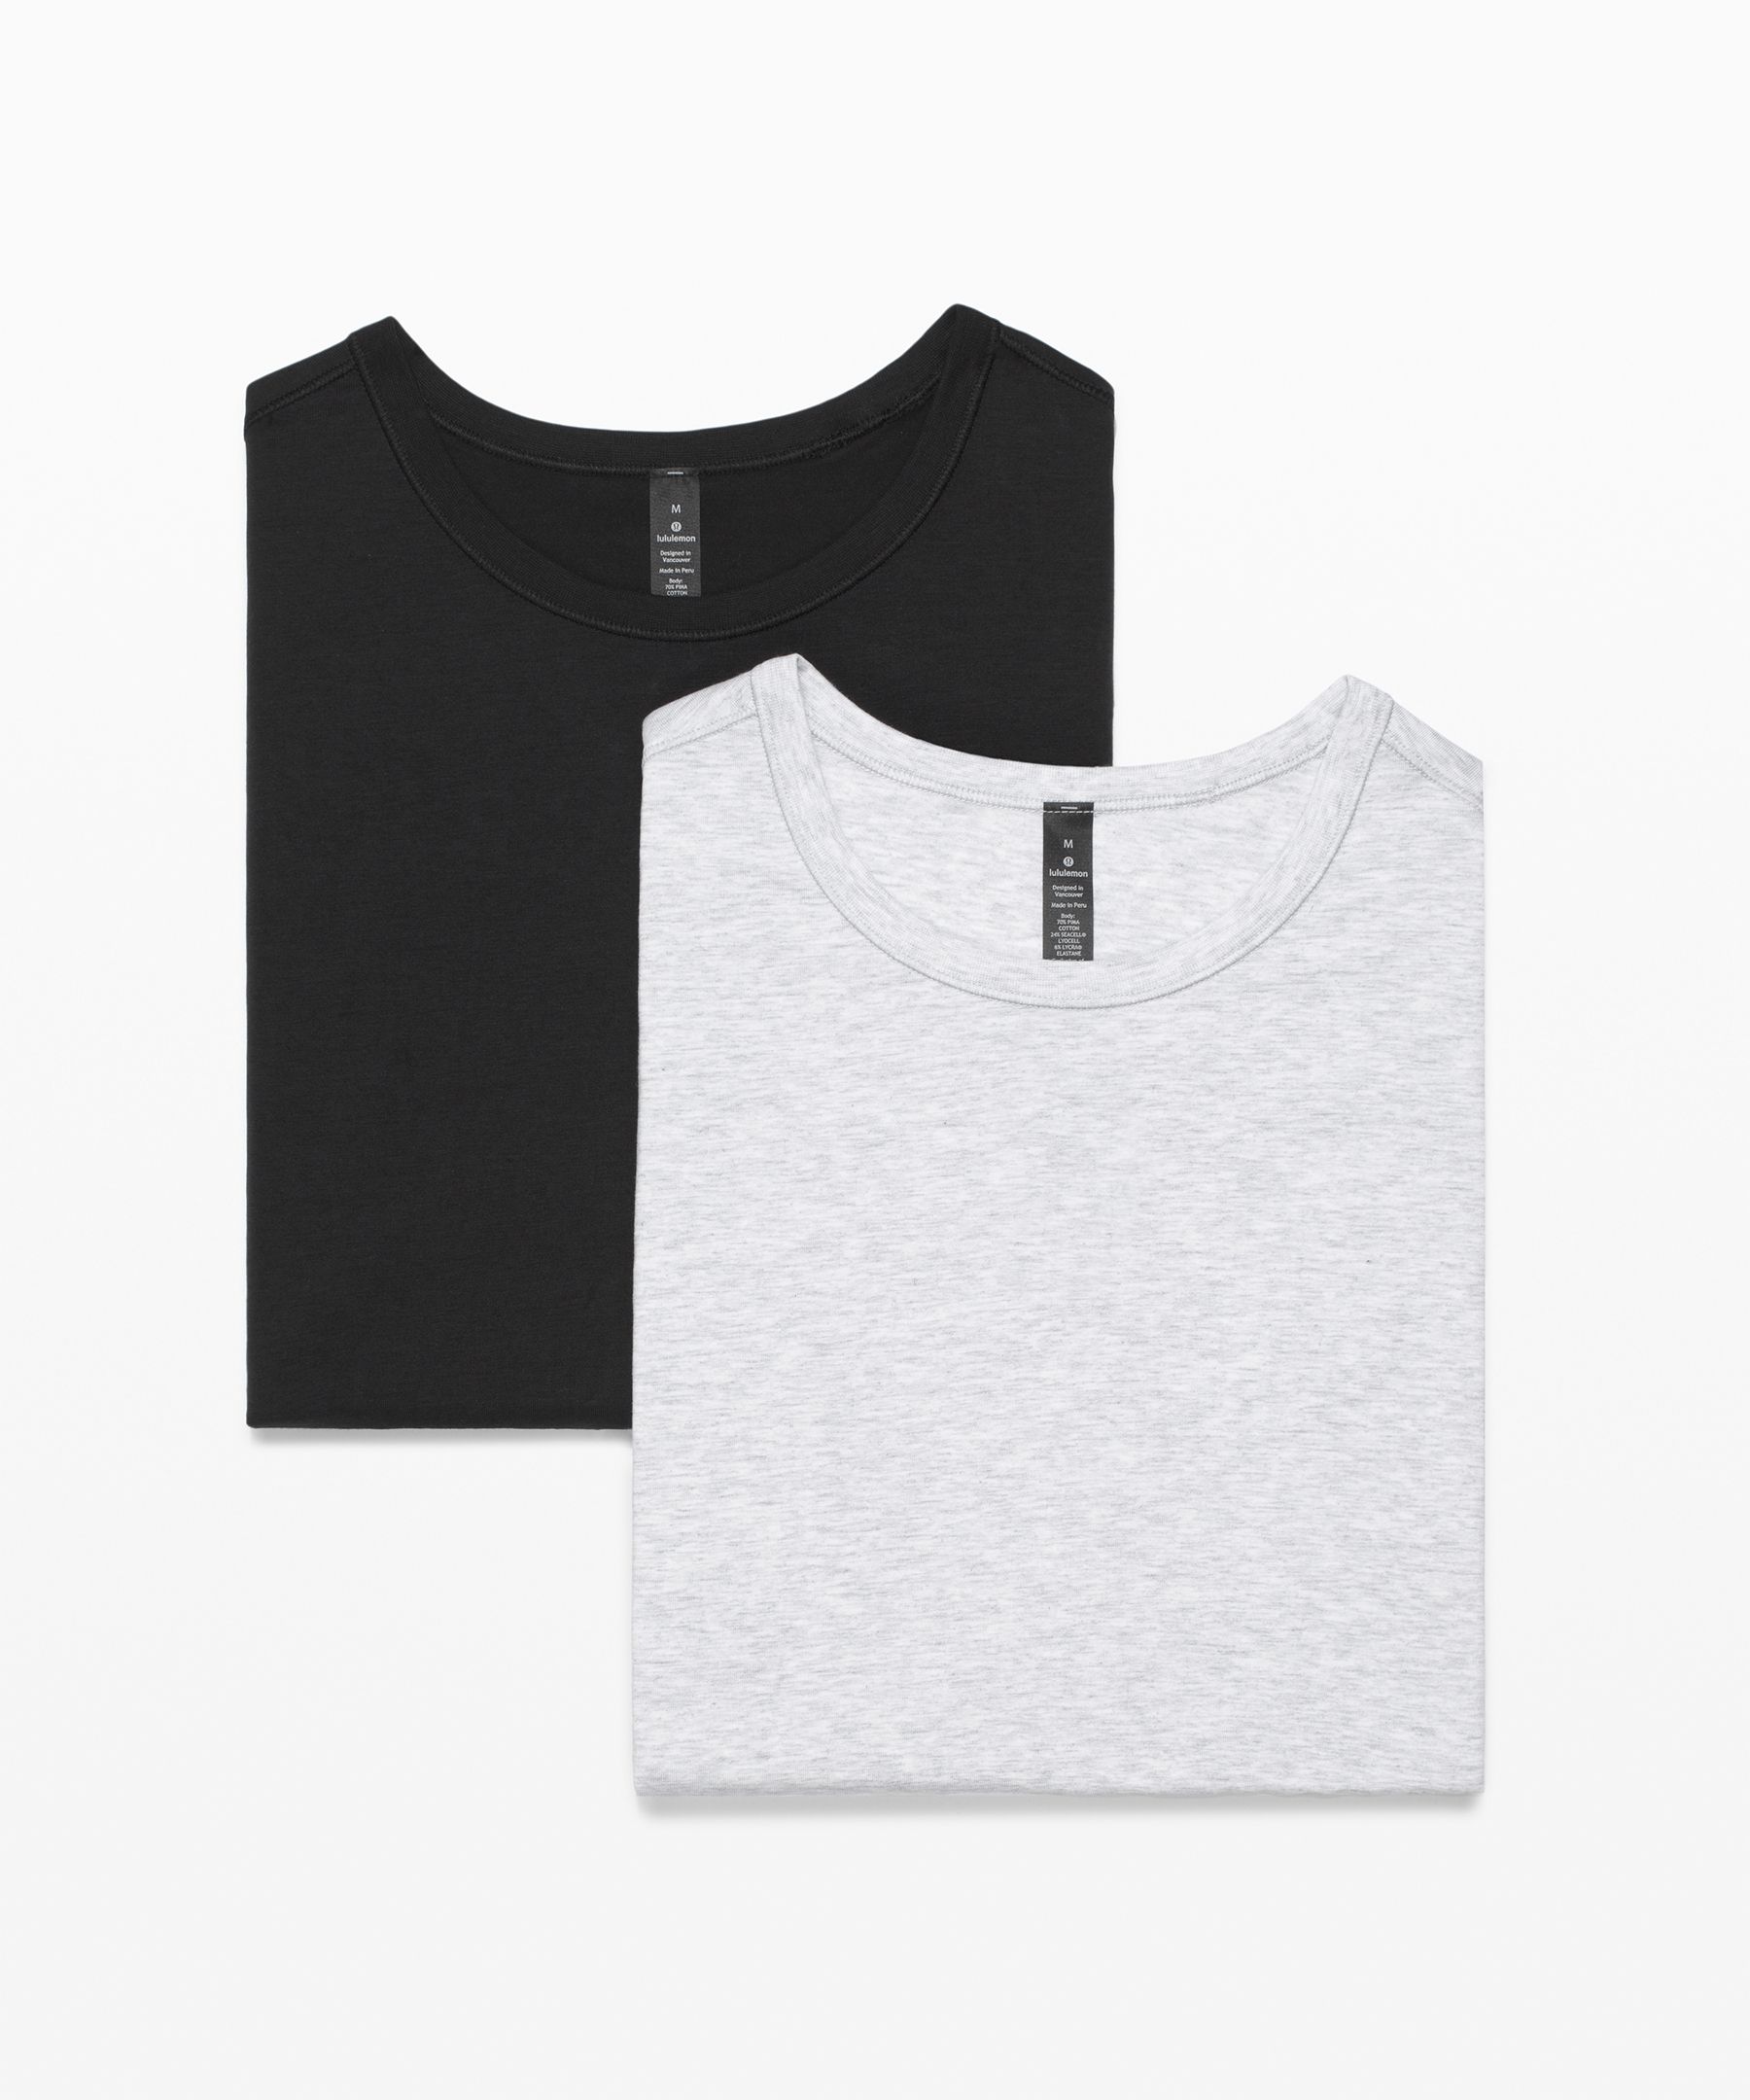 Lululemon 5 Year Basic T-shirt 2 Pack In Black/heathered Core Ultra Light Grey